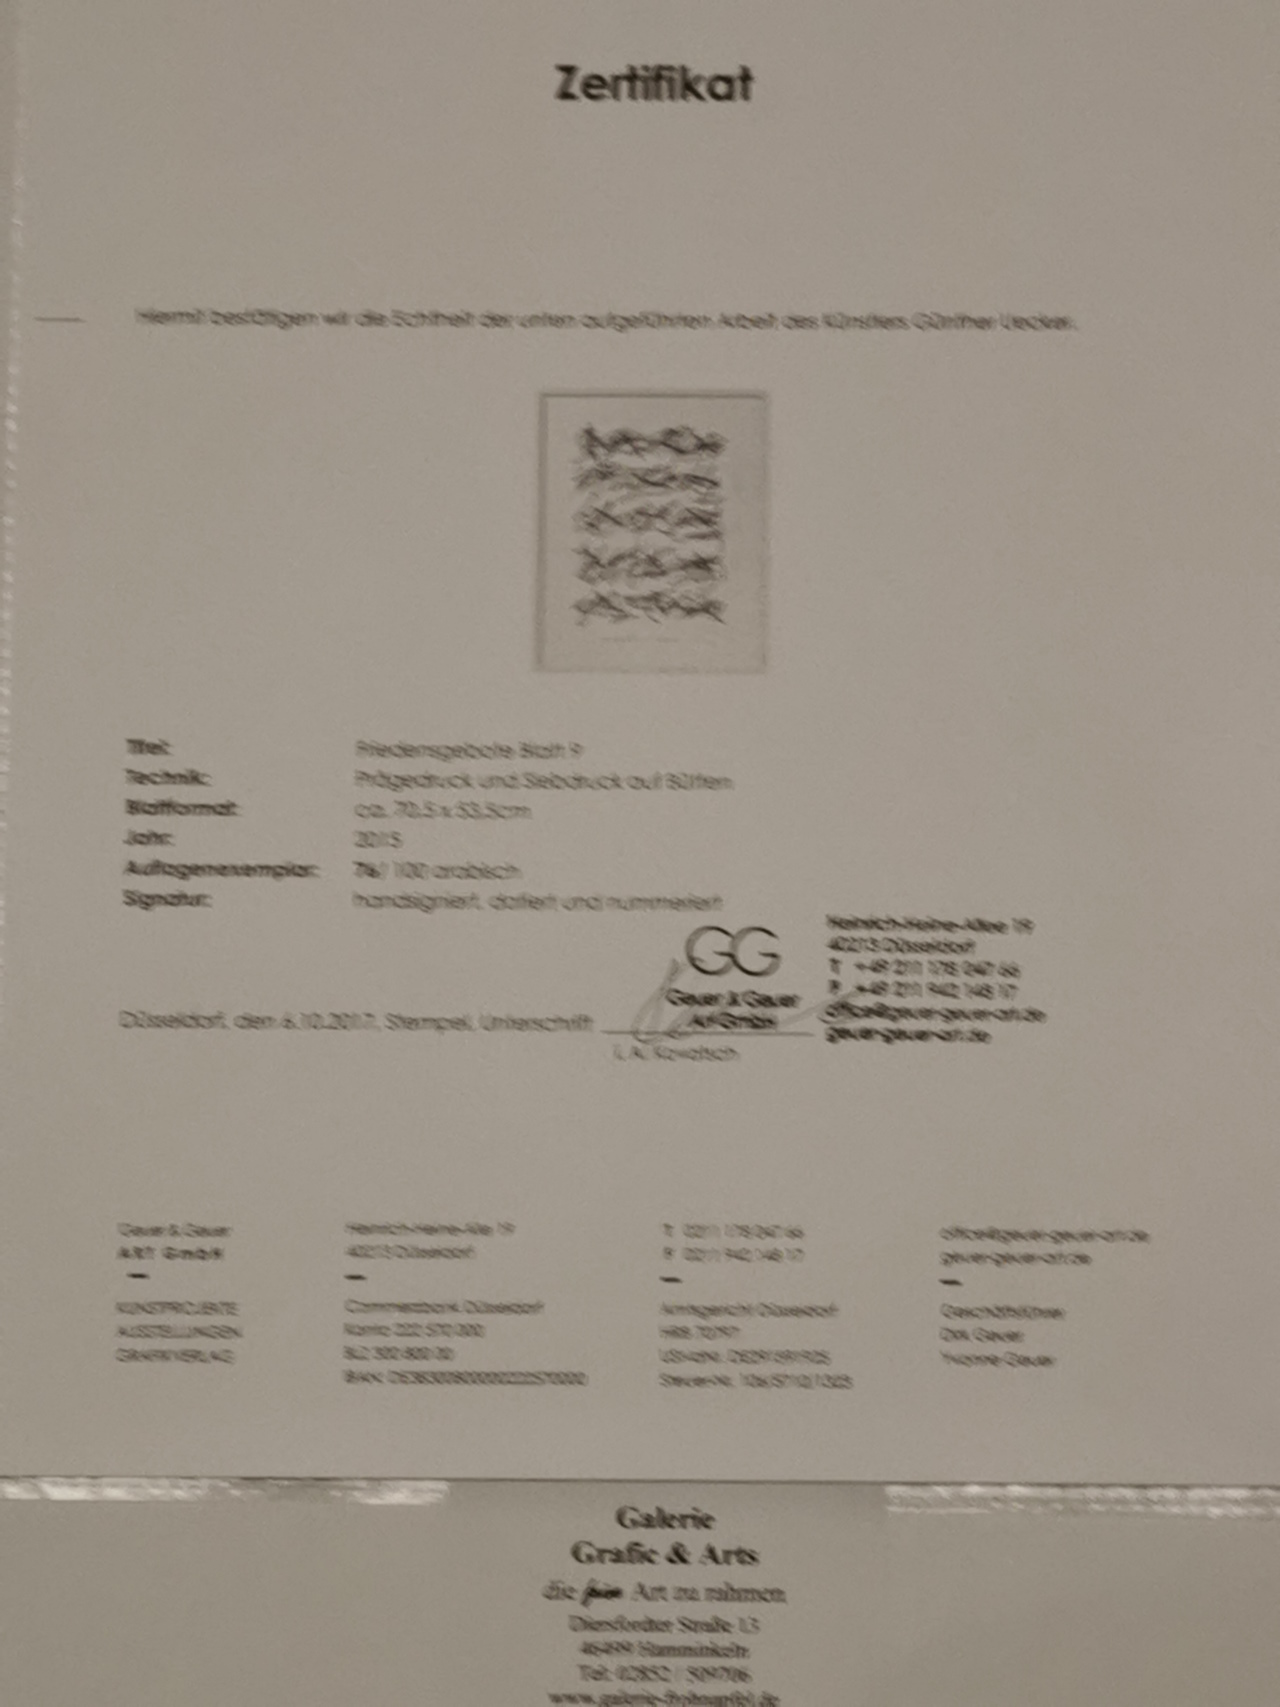 guenther-uecker-friedensgebote-zertifikat